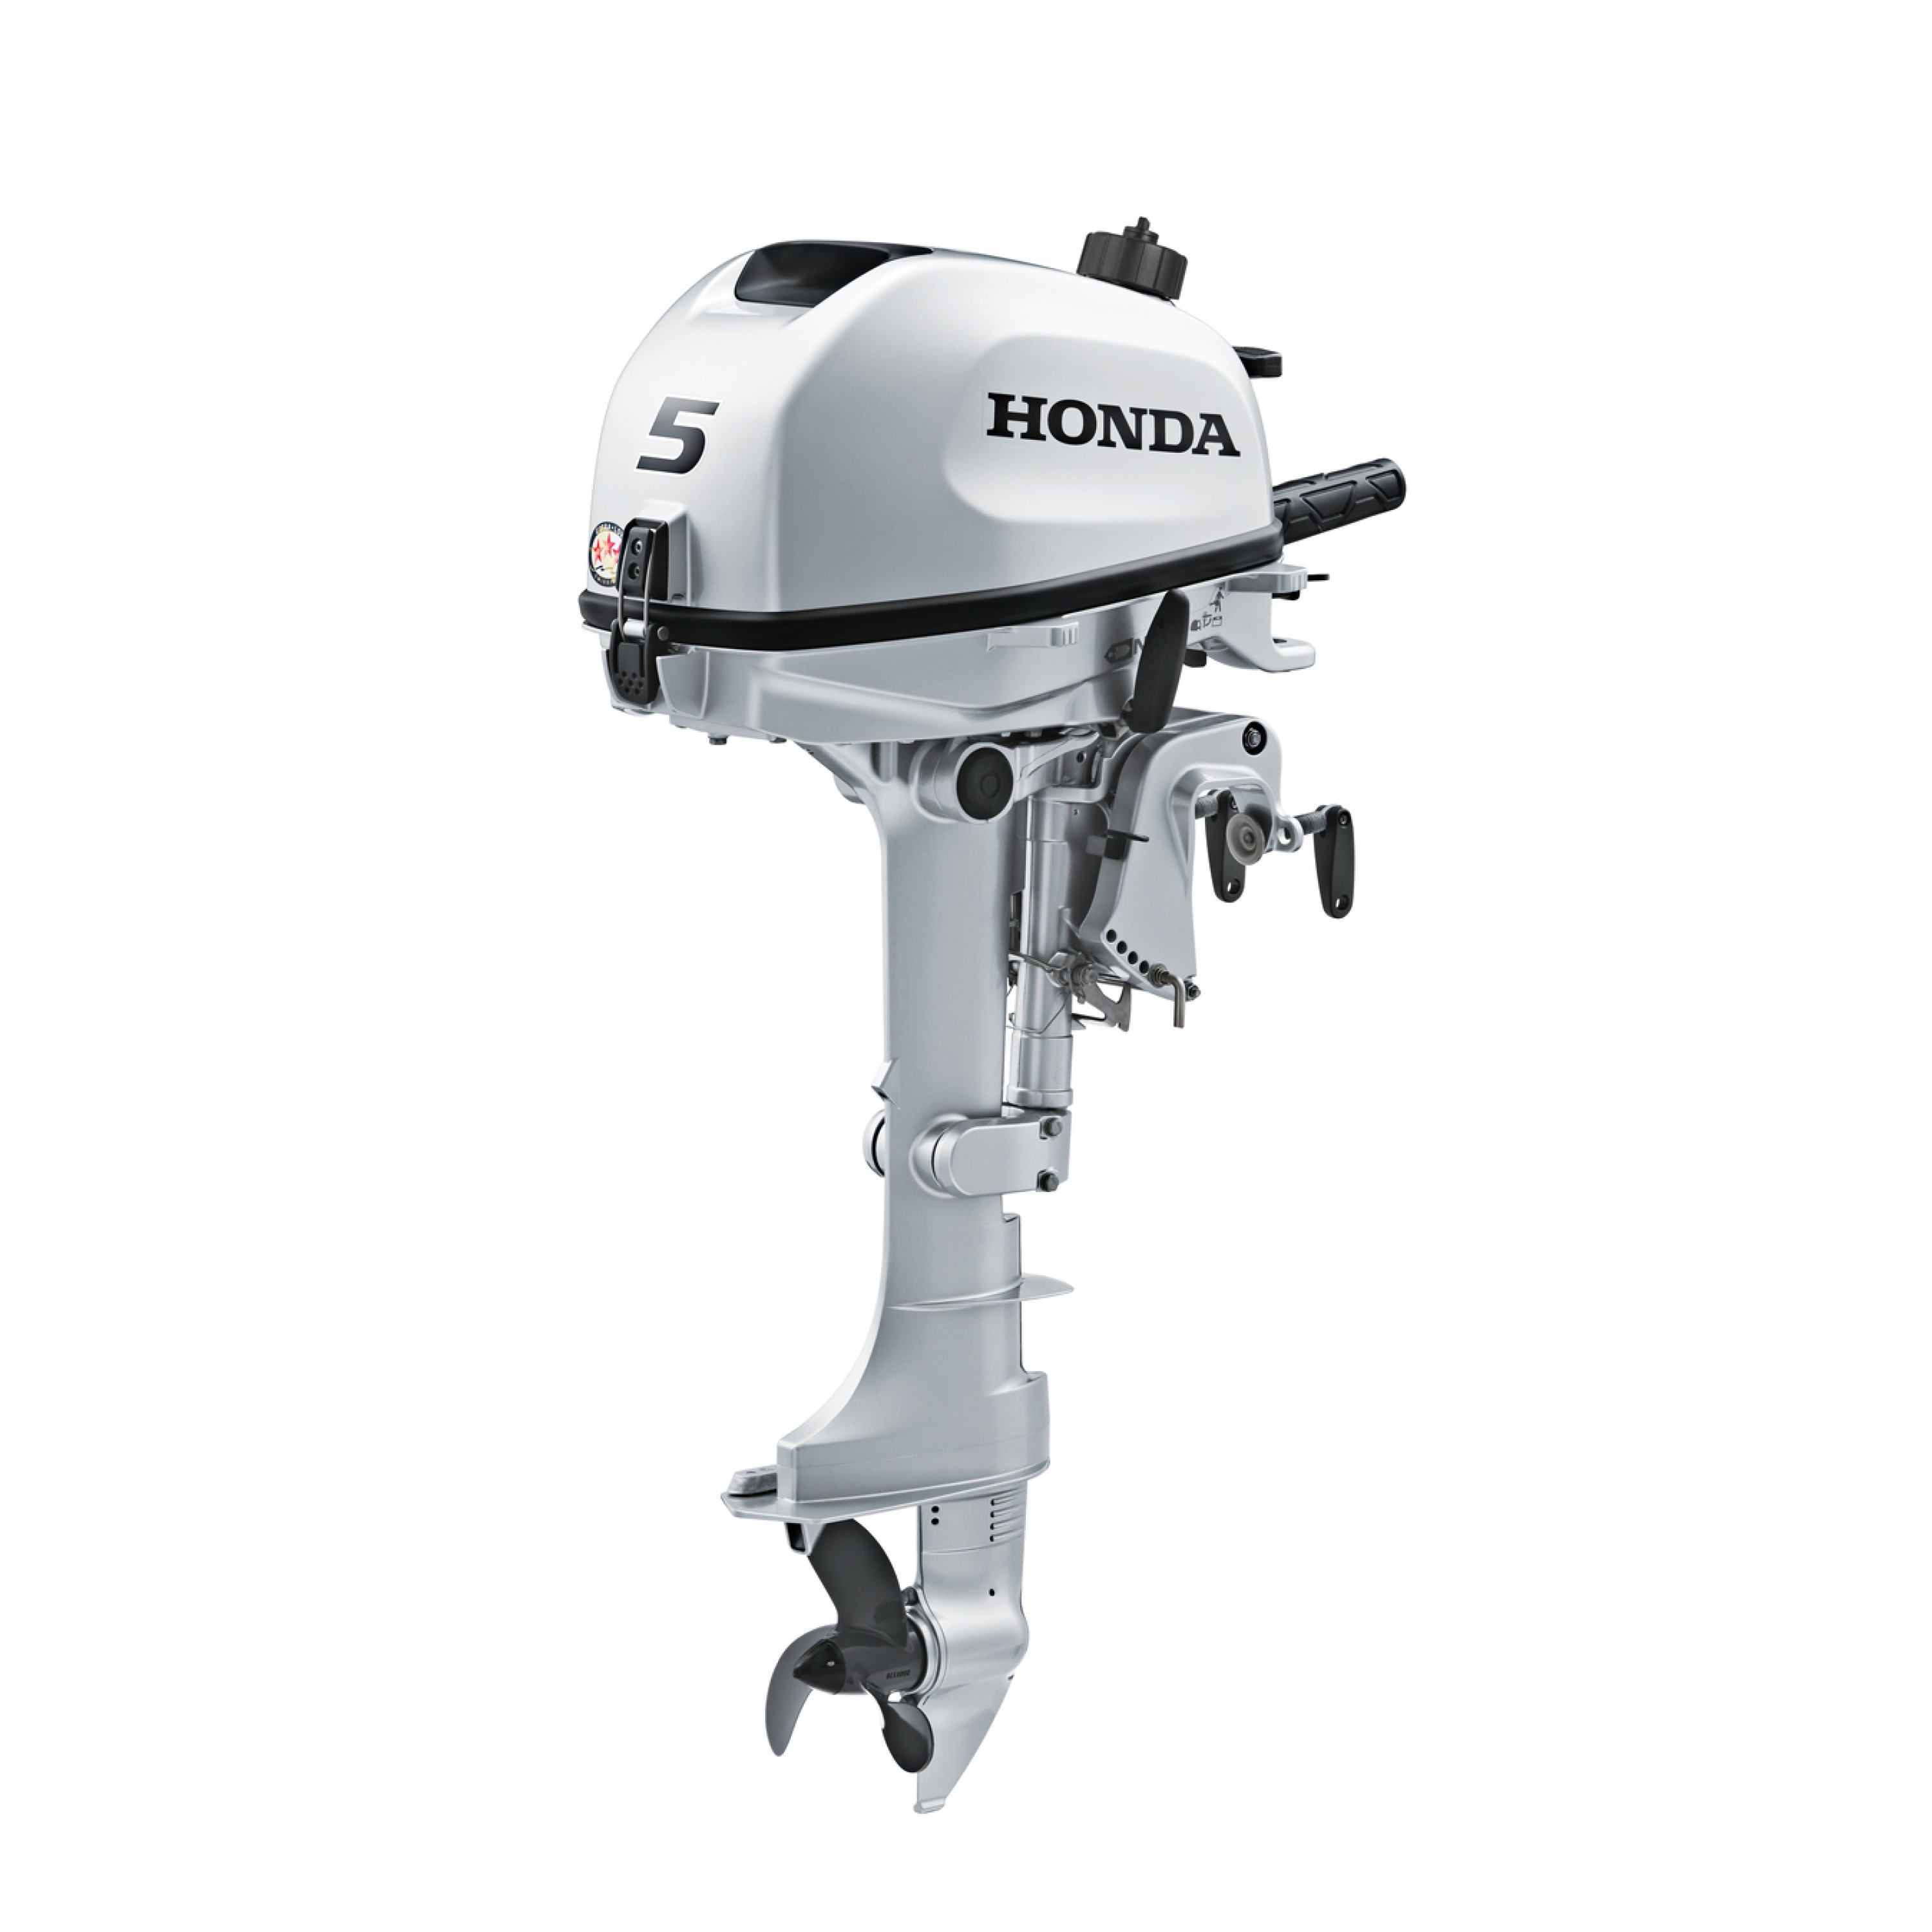 5 HP Honda Outboard Motor, BF5DHSHC